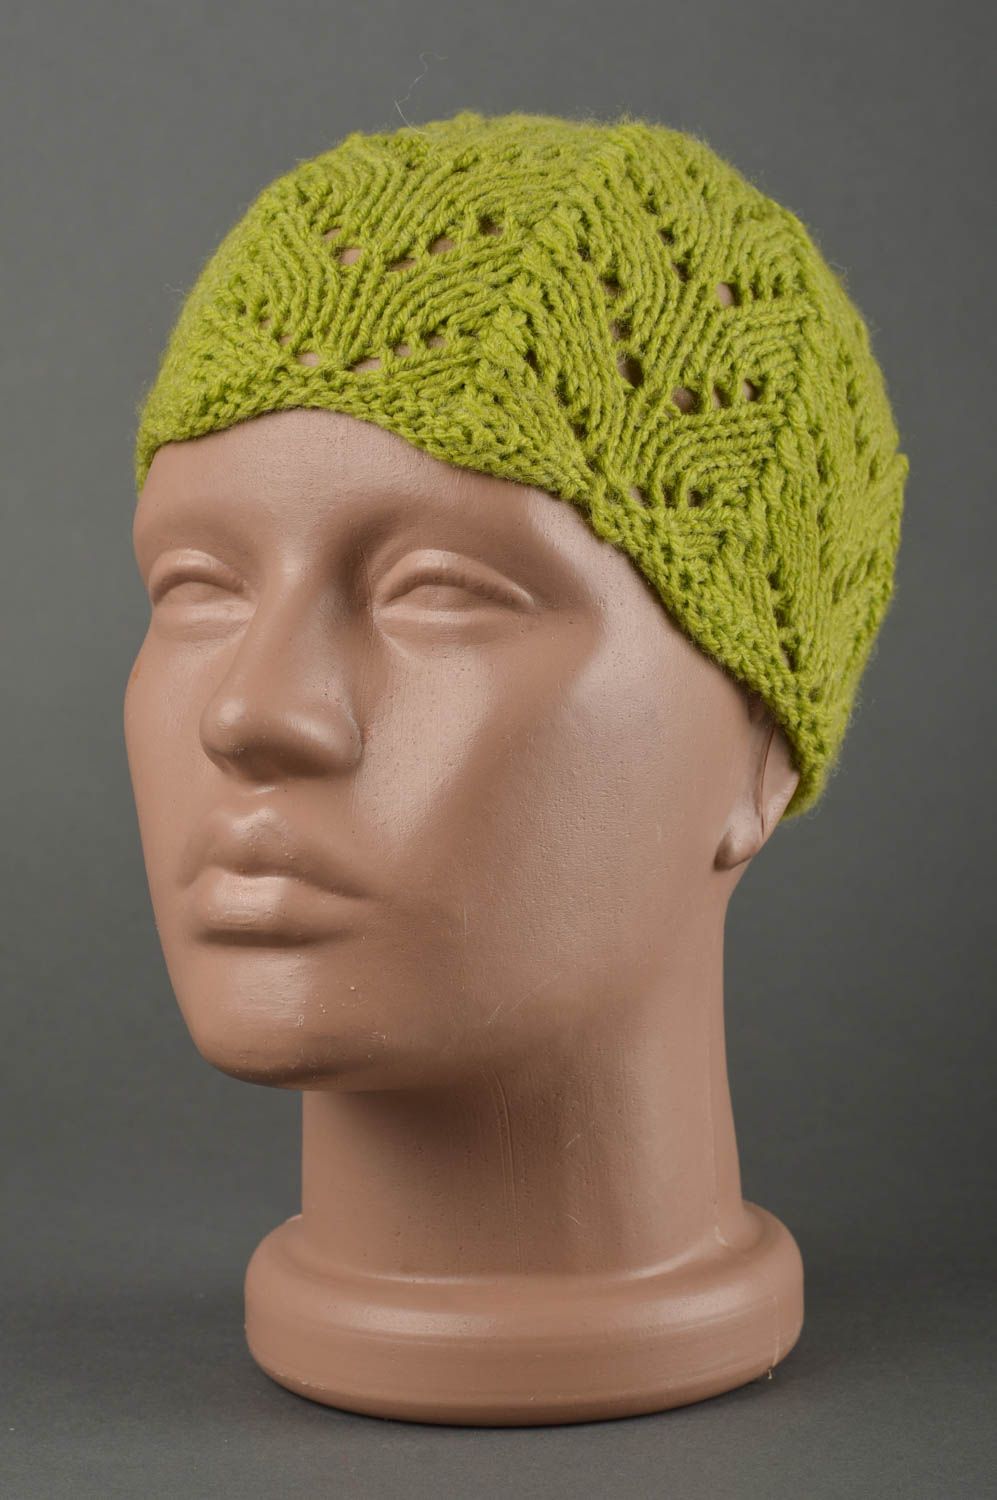 Handmade crochet hat gifts for kids crochet summer hat accessories for girls photo 1